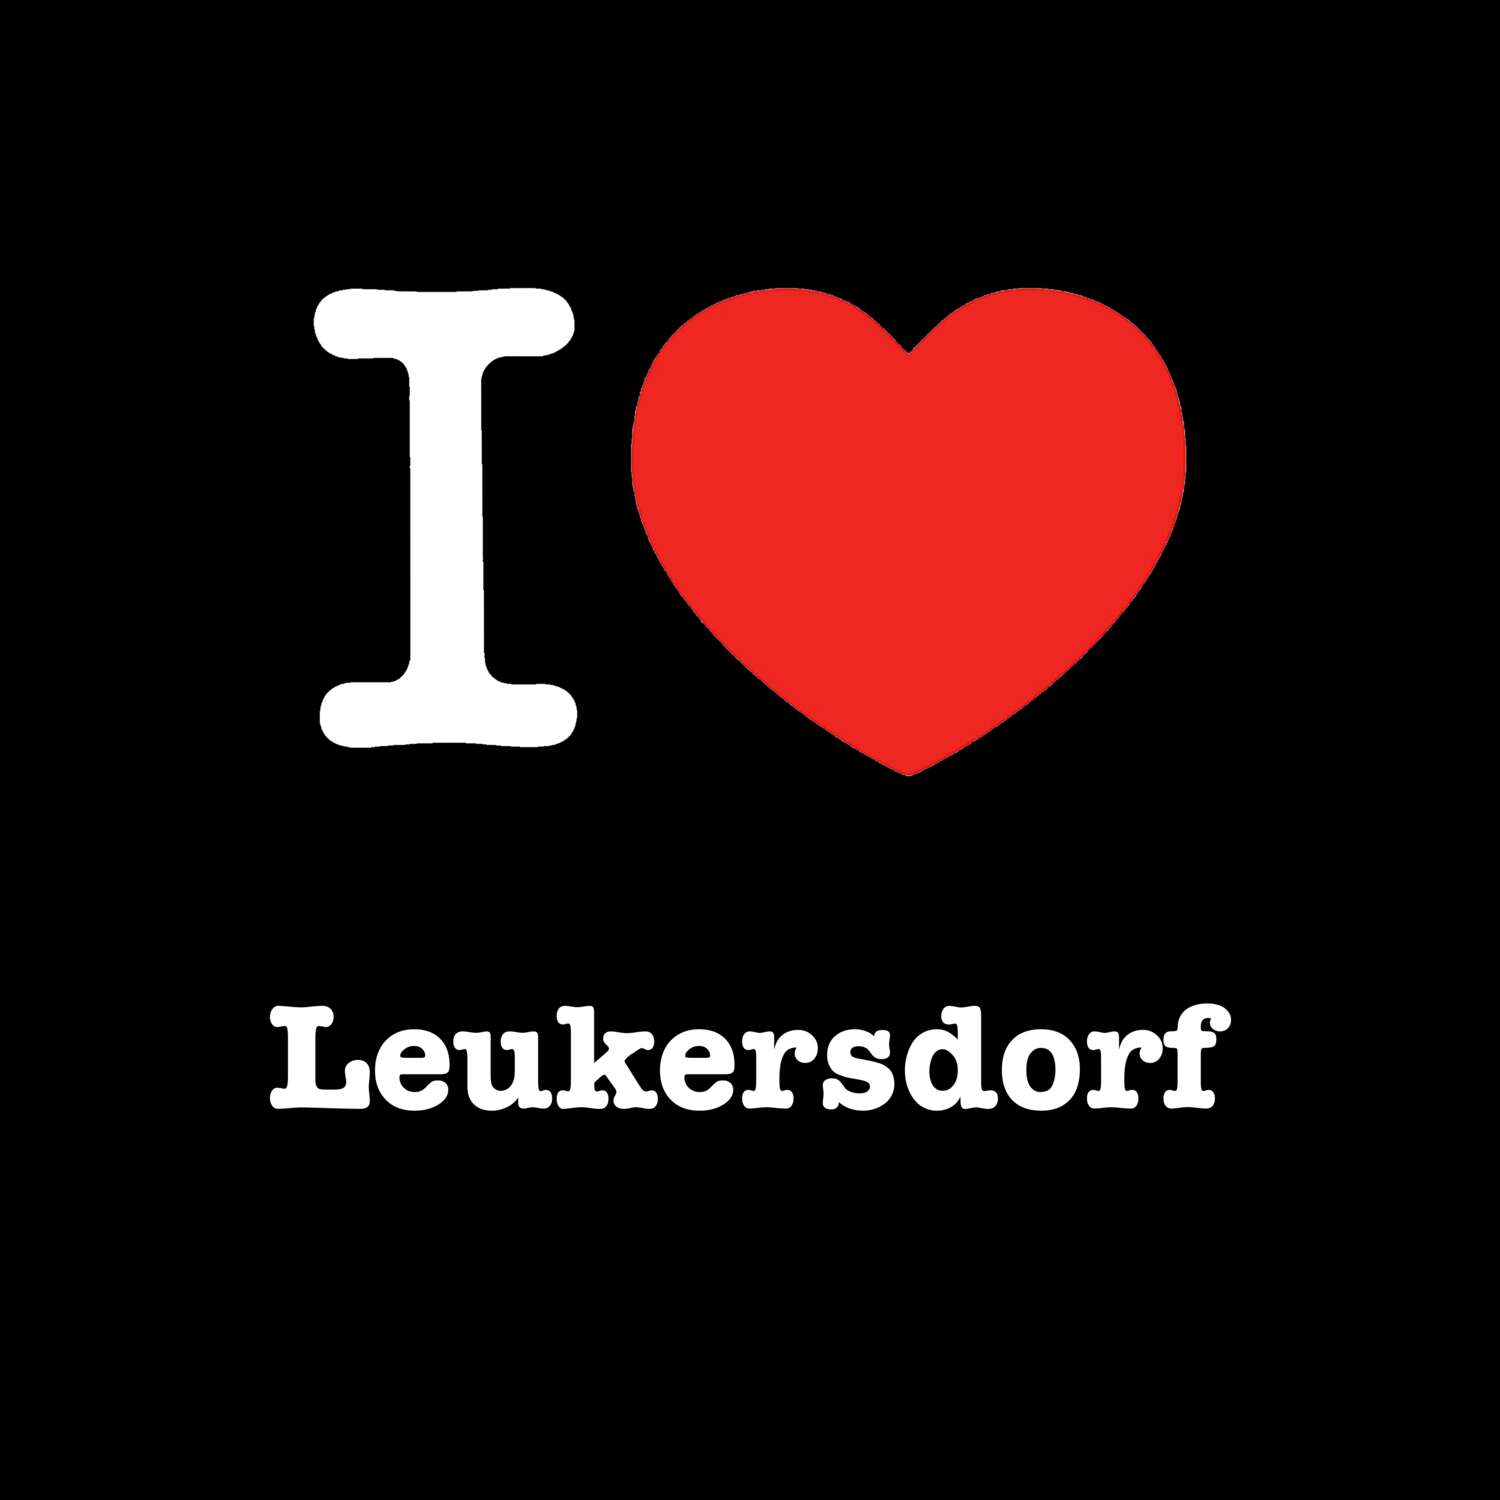 Leukersdorf T-Shirt »I love«